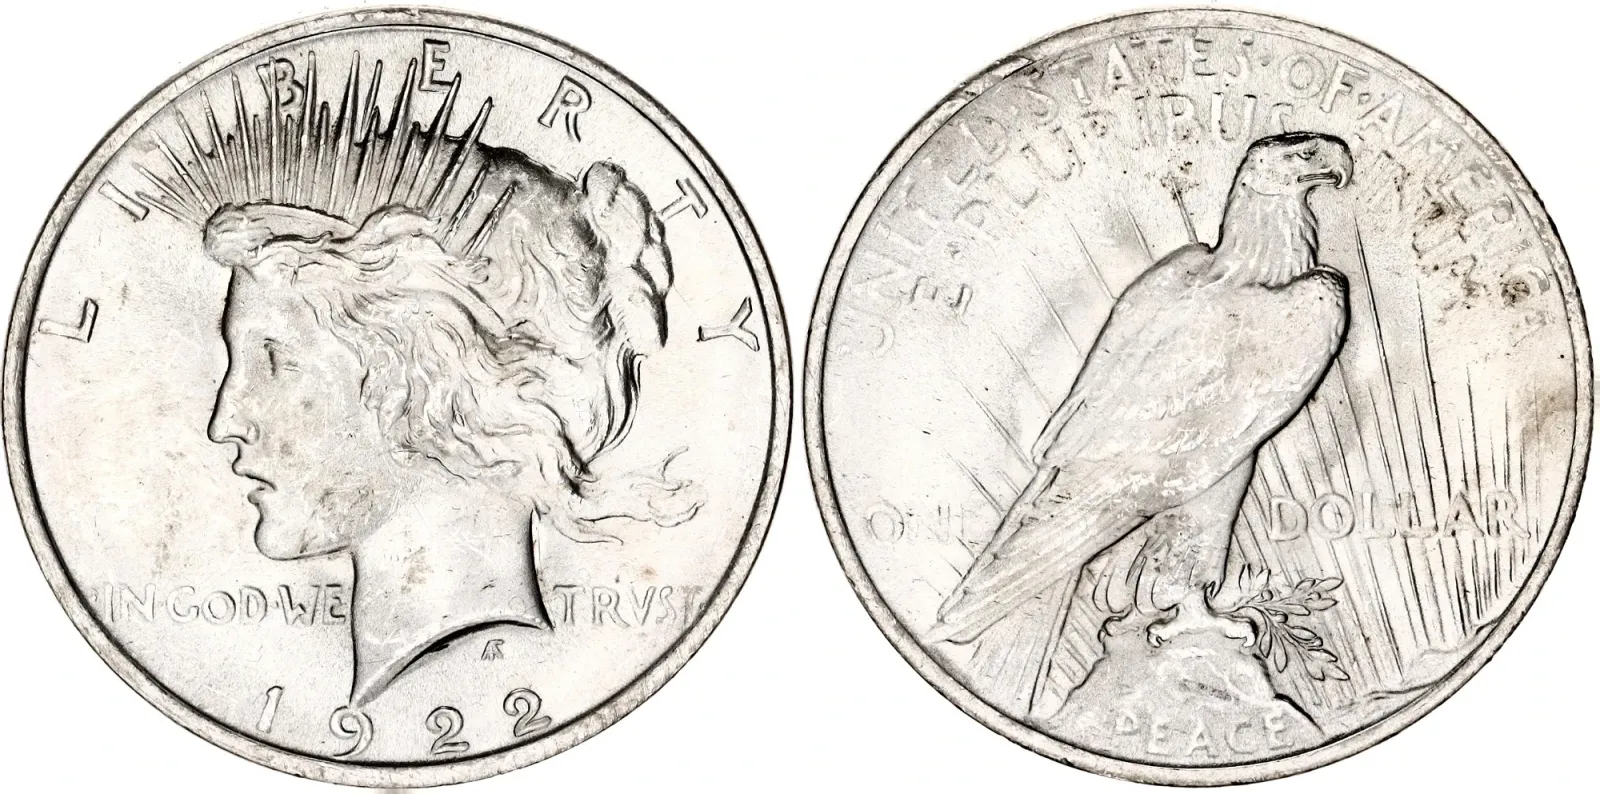 Strieborná veľká minca United States dollar 1922